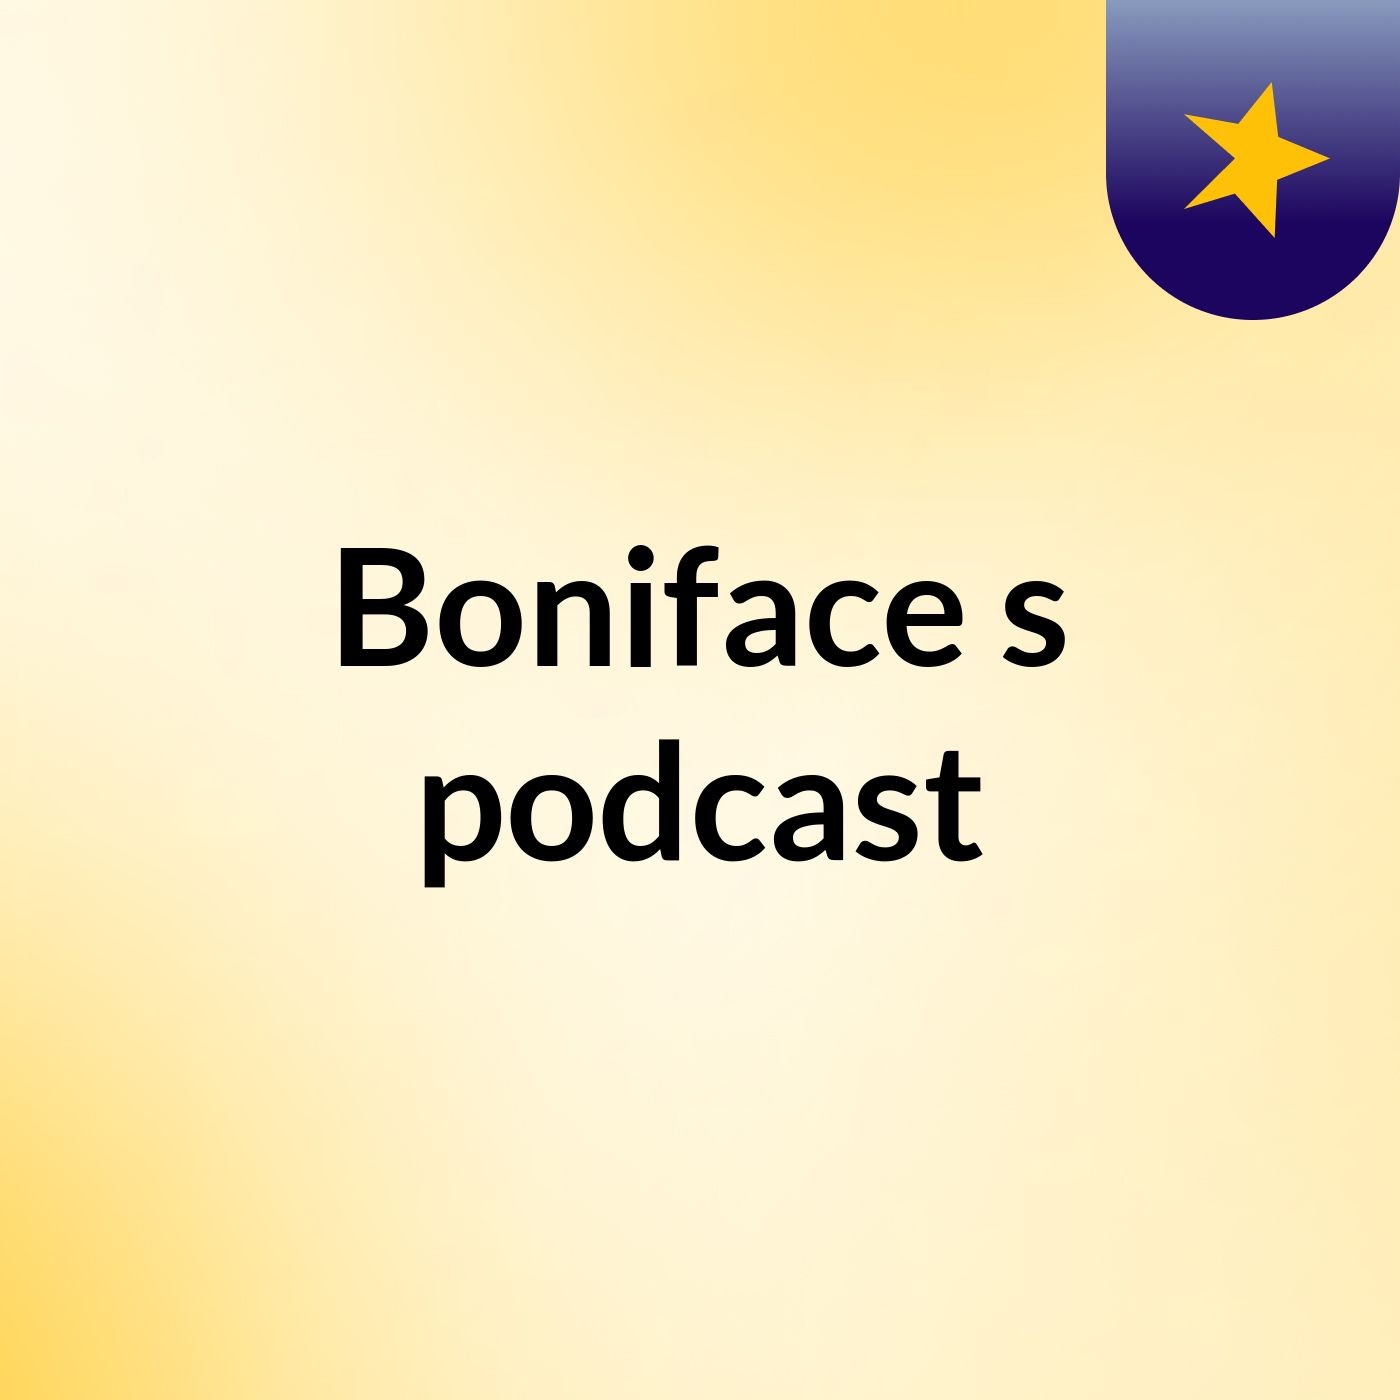 Boniface's podcast